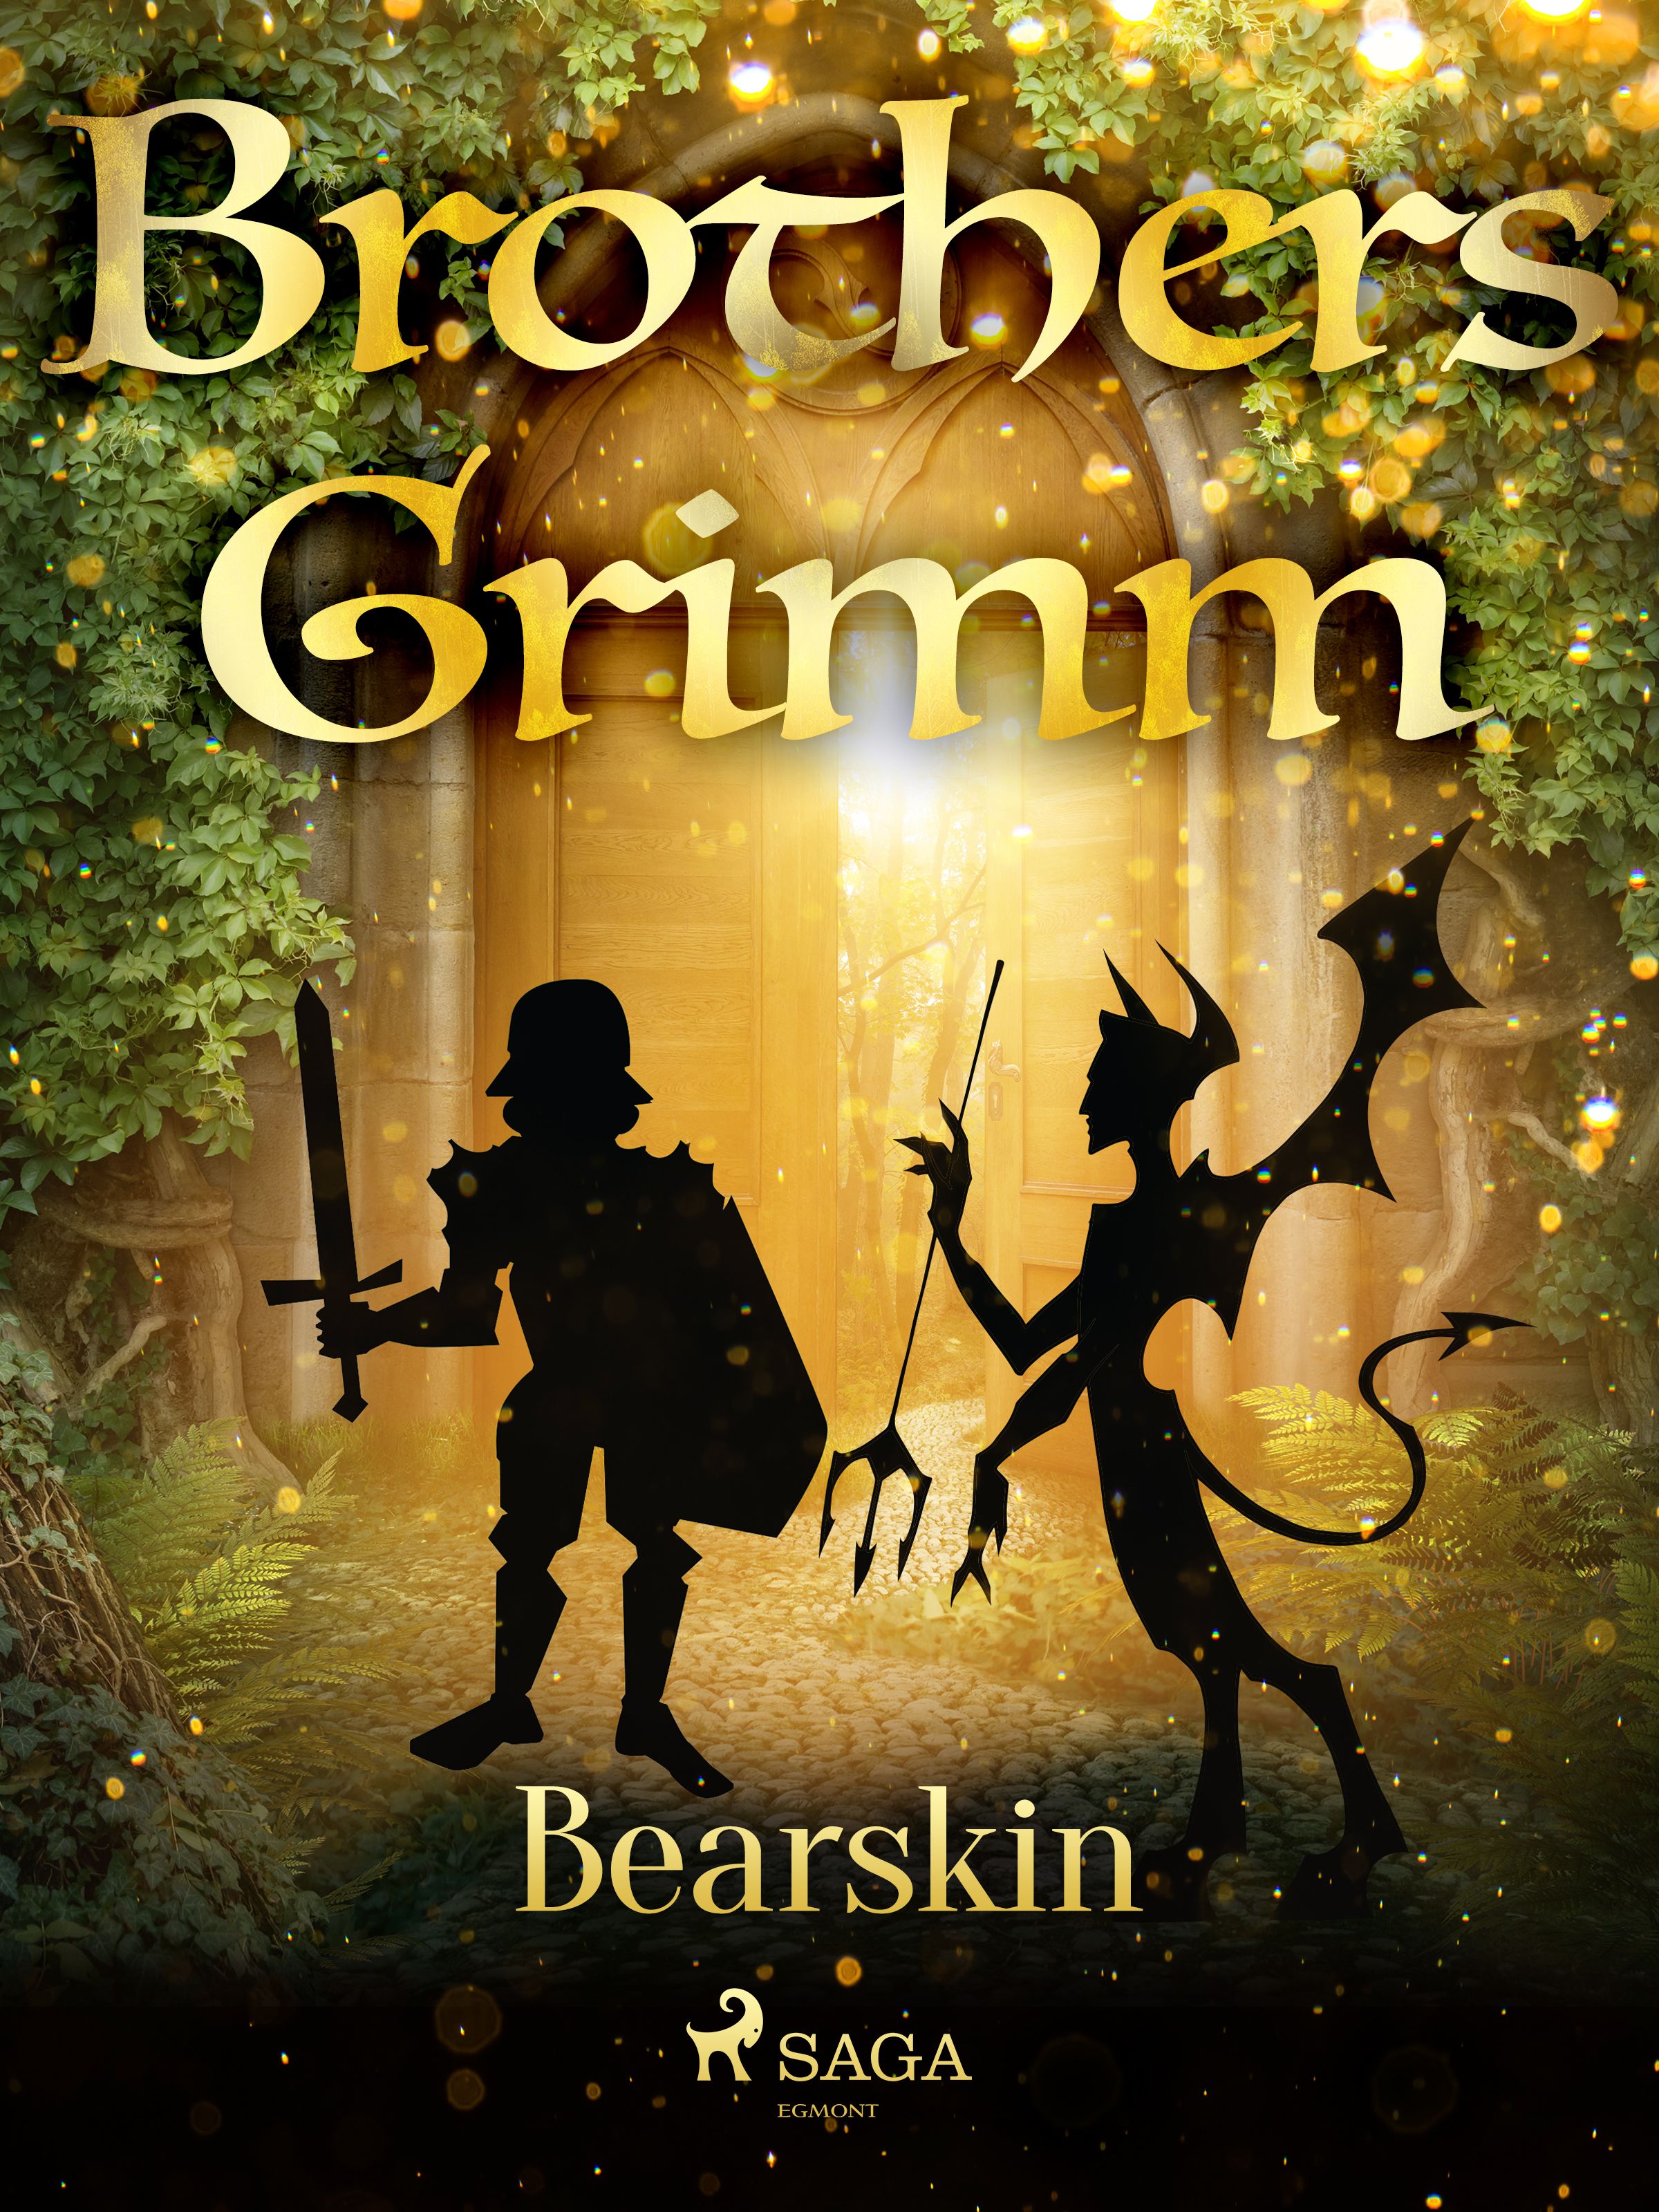 Bearskin, eBook by Brothers Grimm